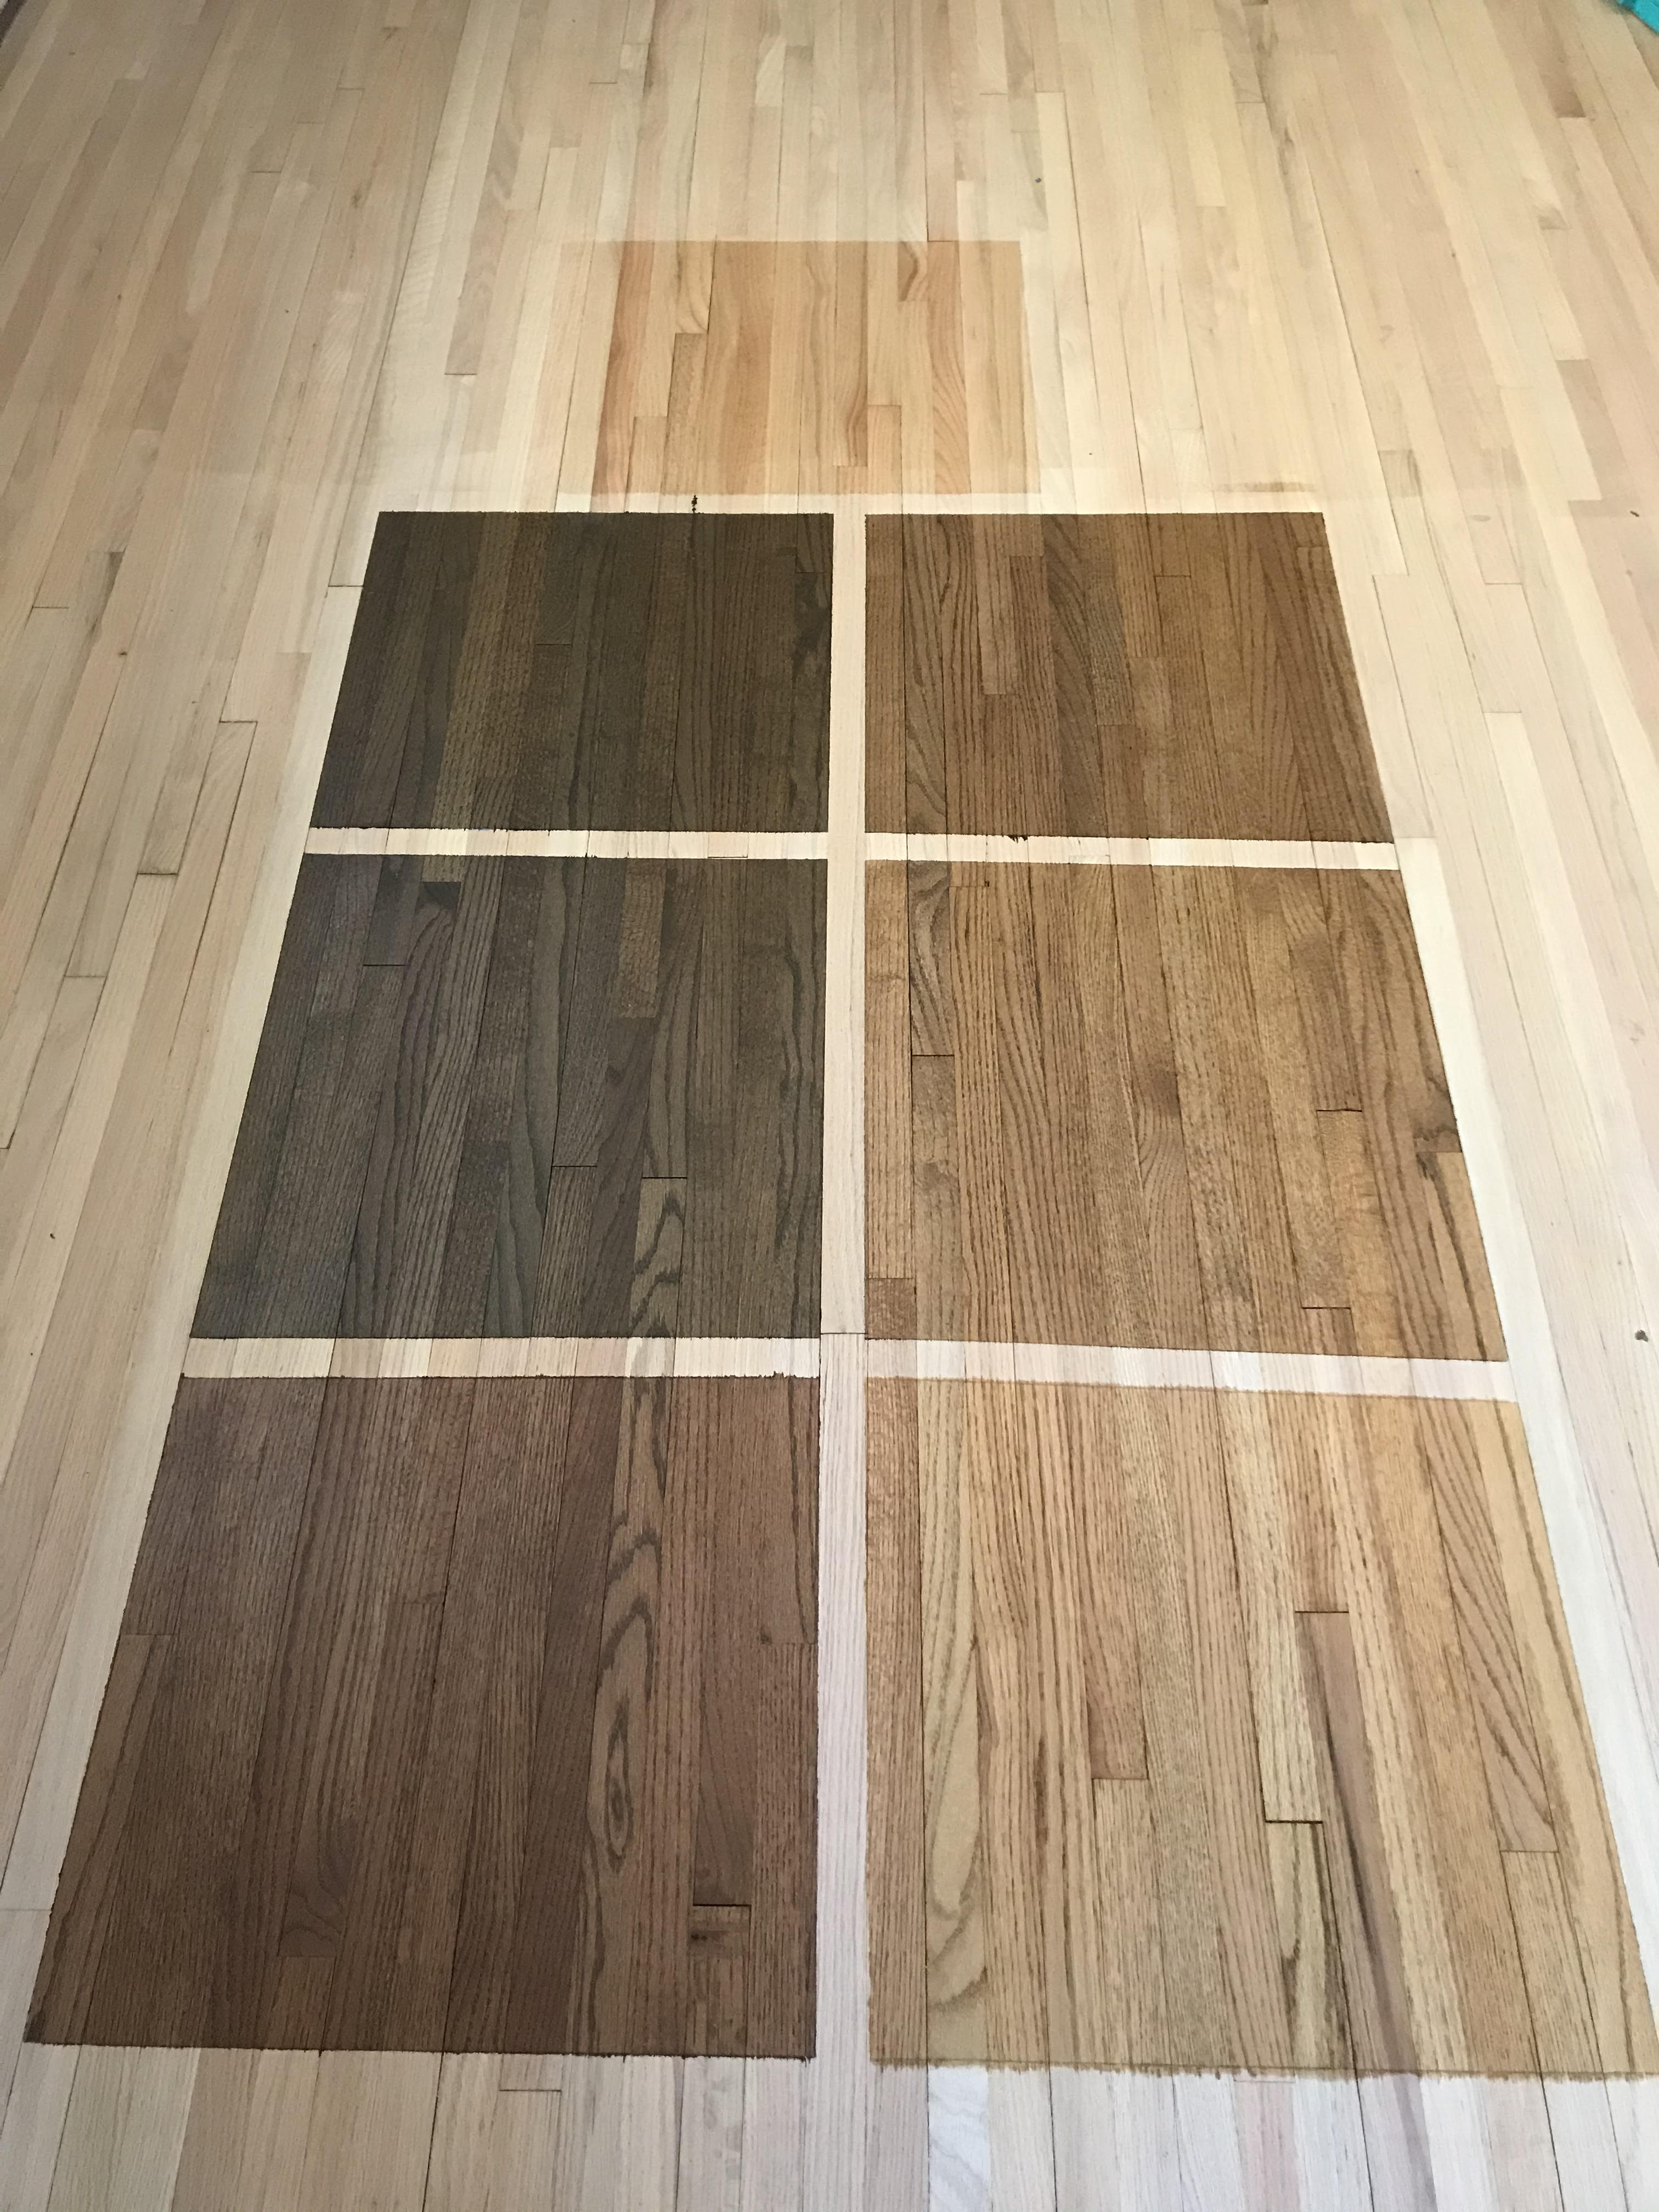 Hardwood Floor Refinishing Ub, Alternatives To Refinishing Hardwood Floors